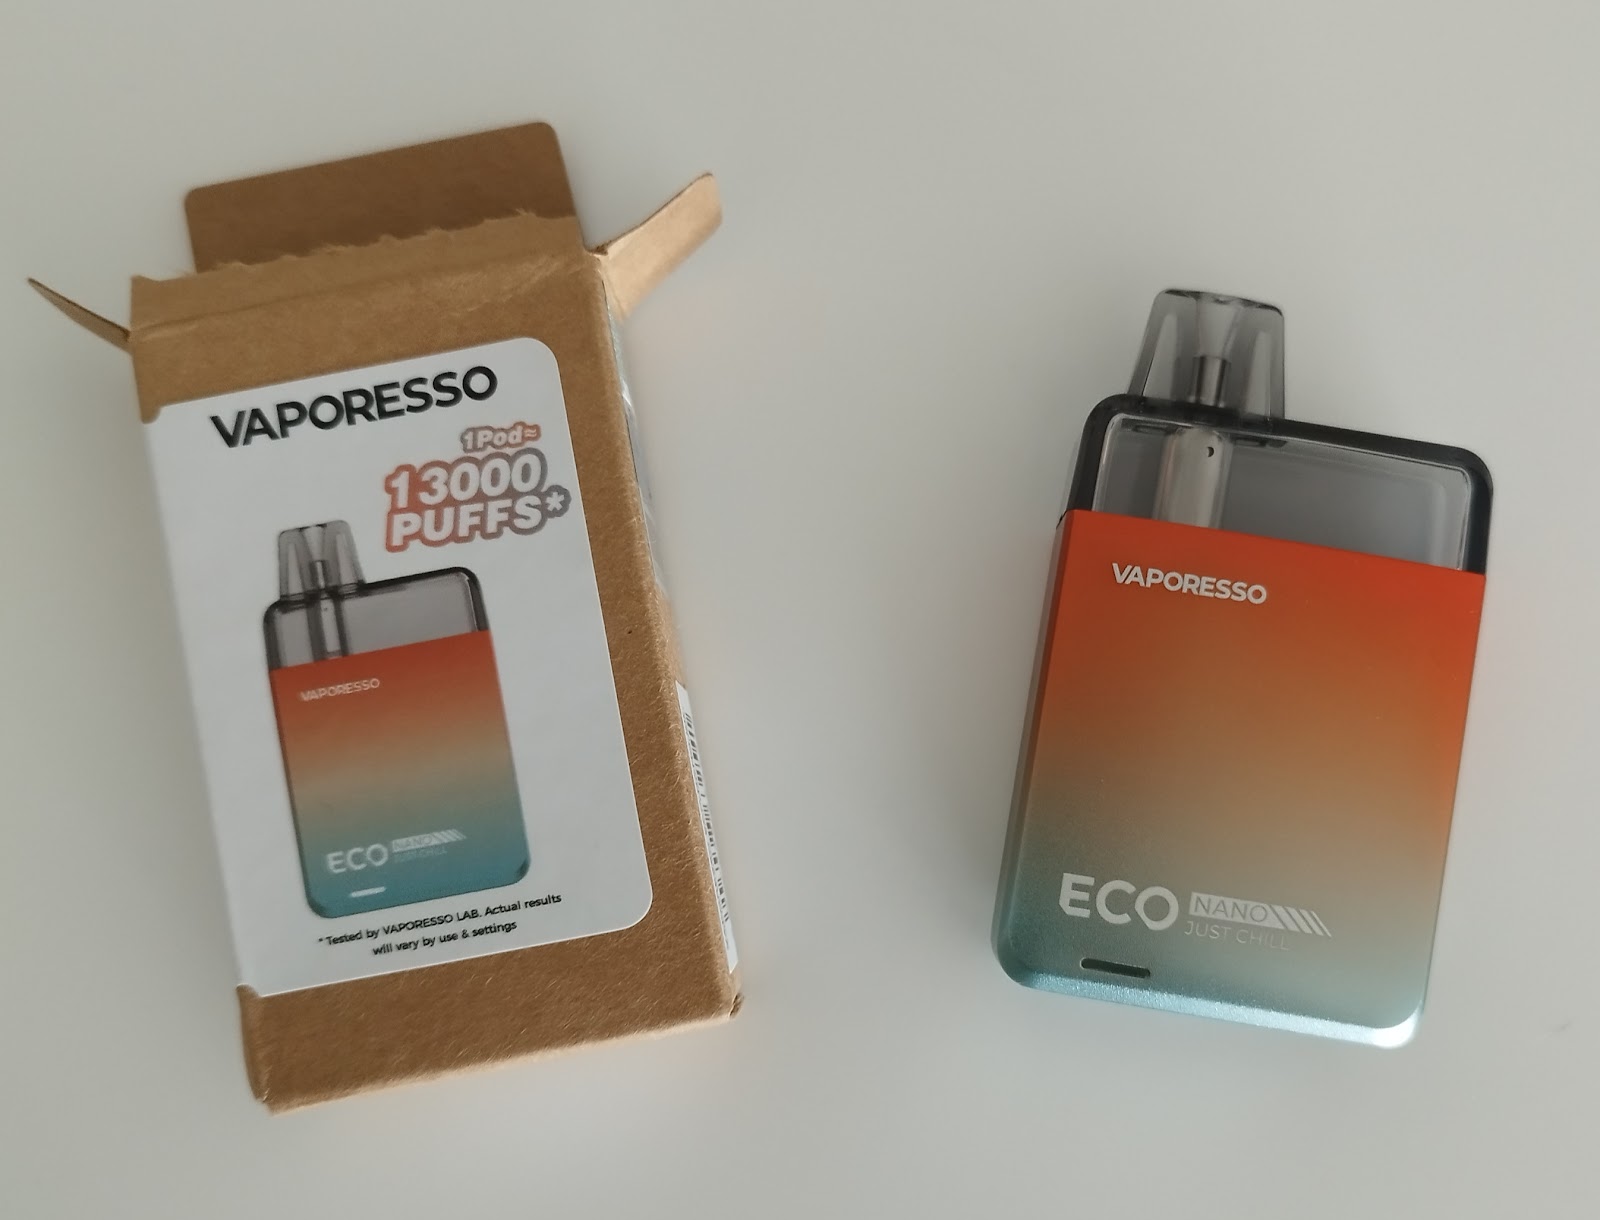 Vaporesso ECO Nano Pod Kit Review - The Economical Choice - Ecigclick